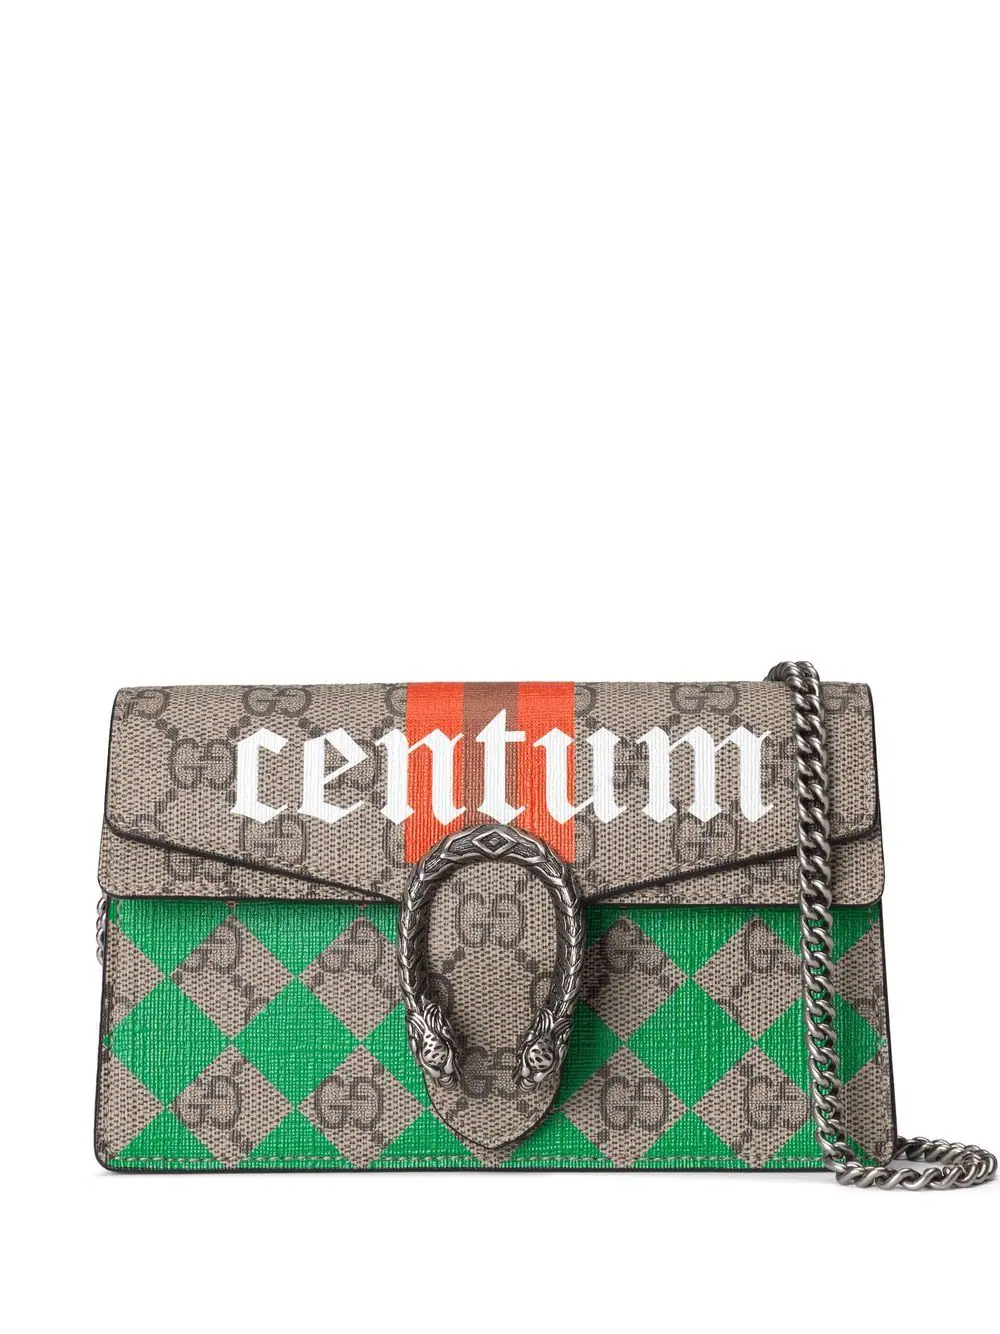 Gucci
Centum Dionysus super mini bag